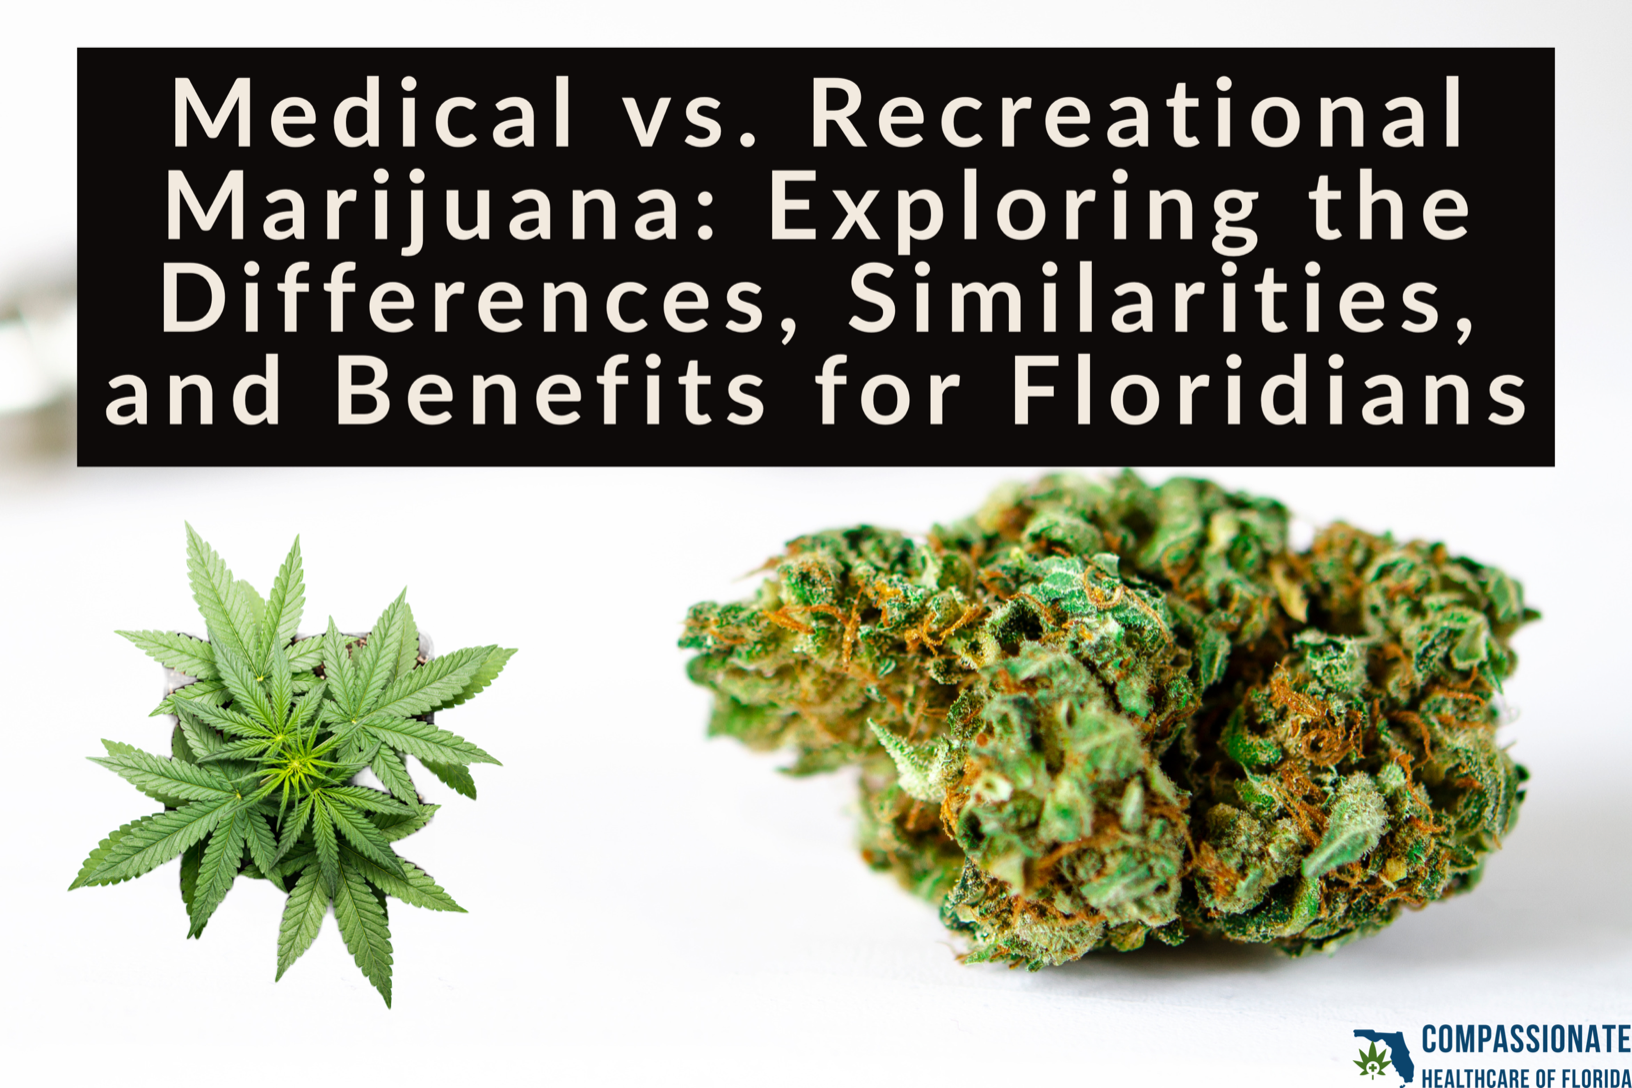 Medical vs recreational